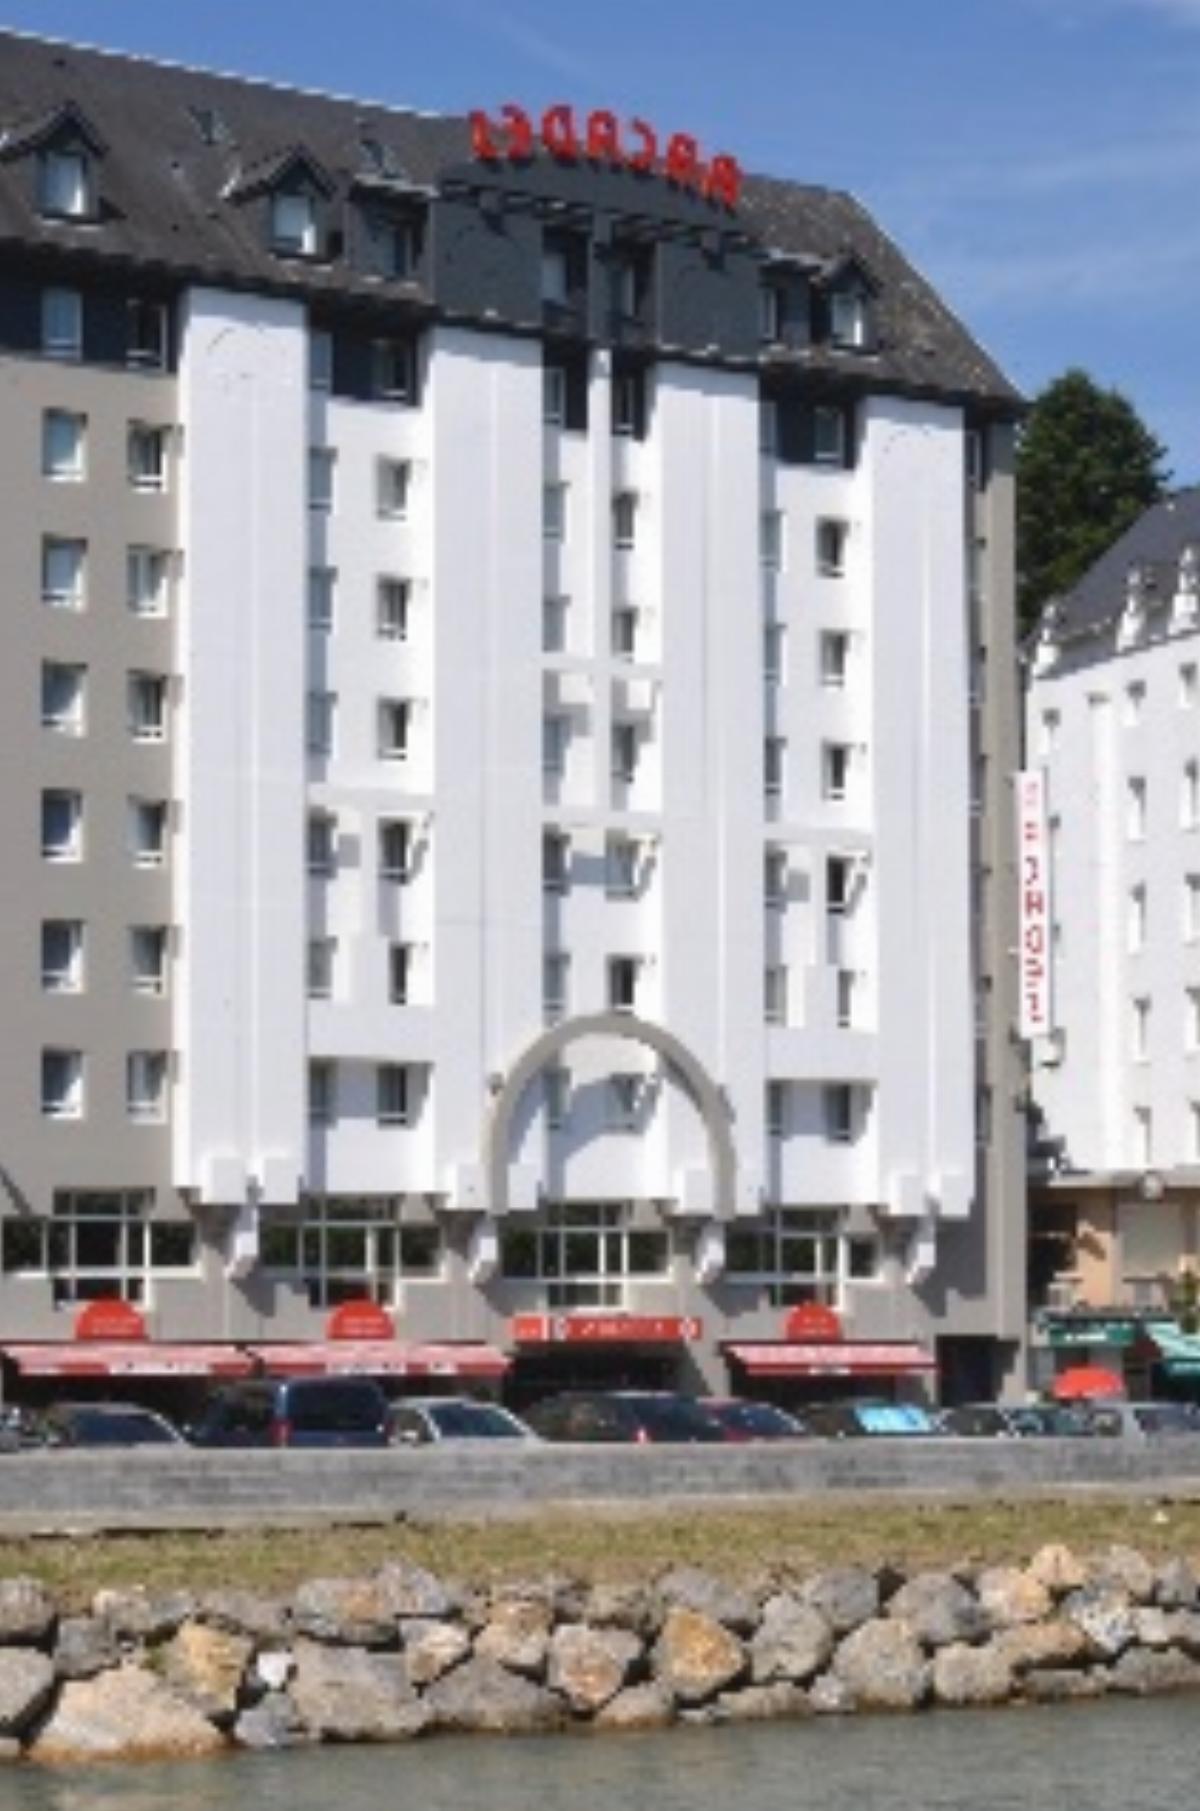 Hôtel Arcades Hotel Lourdes France